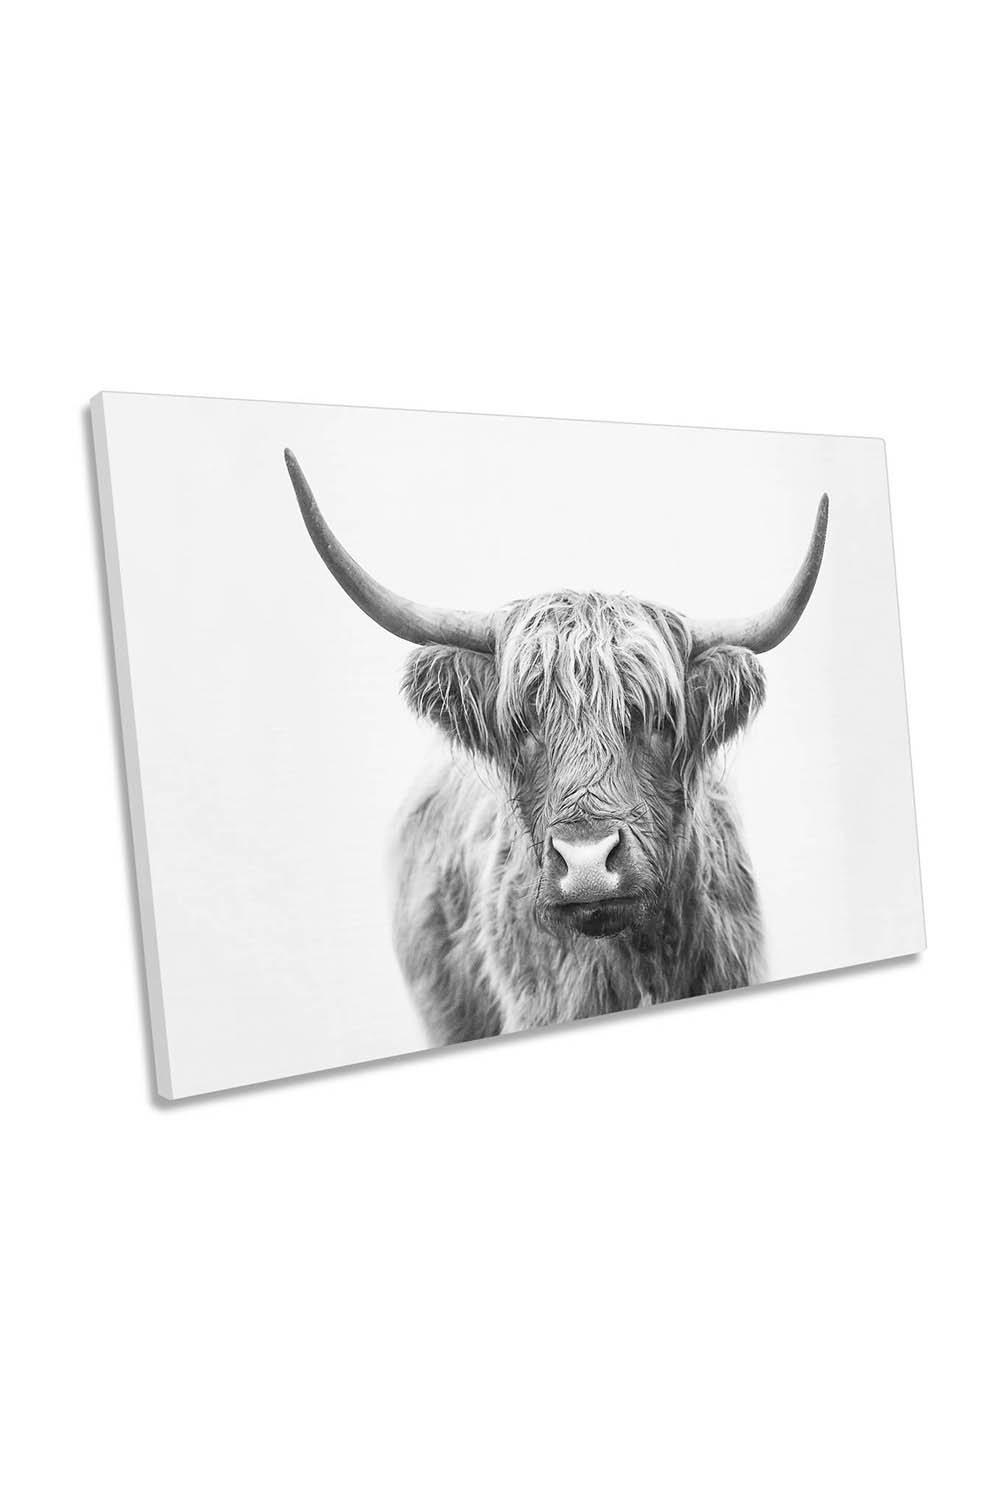 Highland Bull Scottish Cow Farm Canvas Wall Art Picture Print